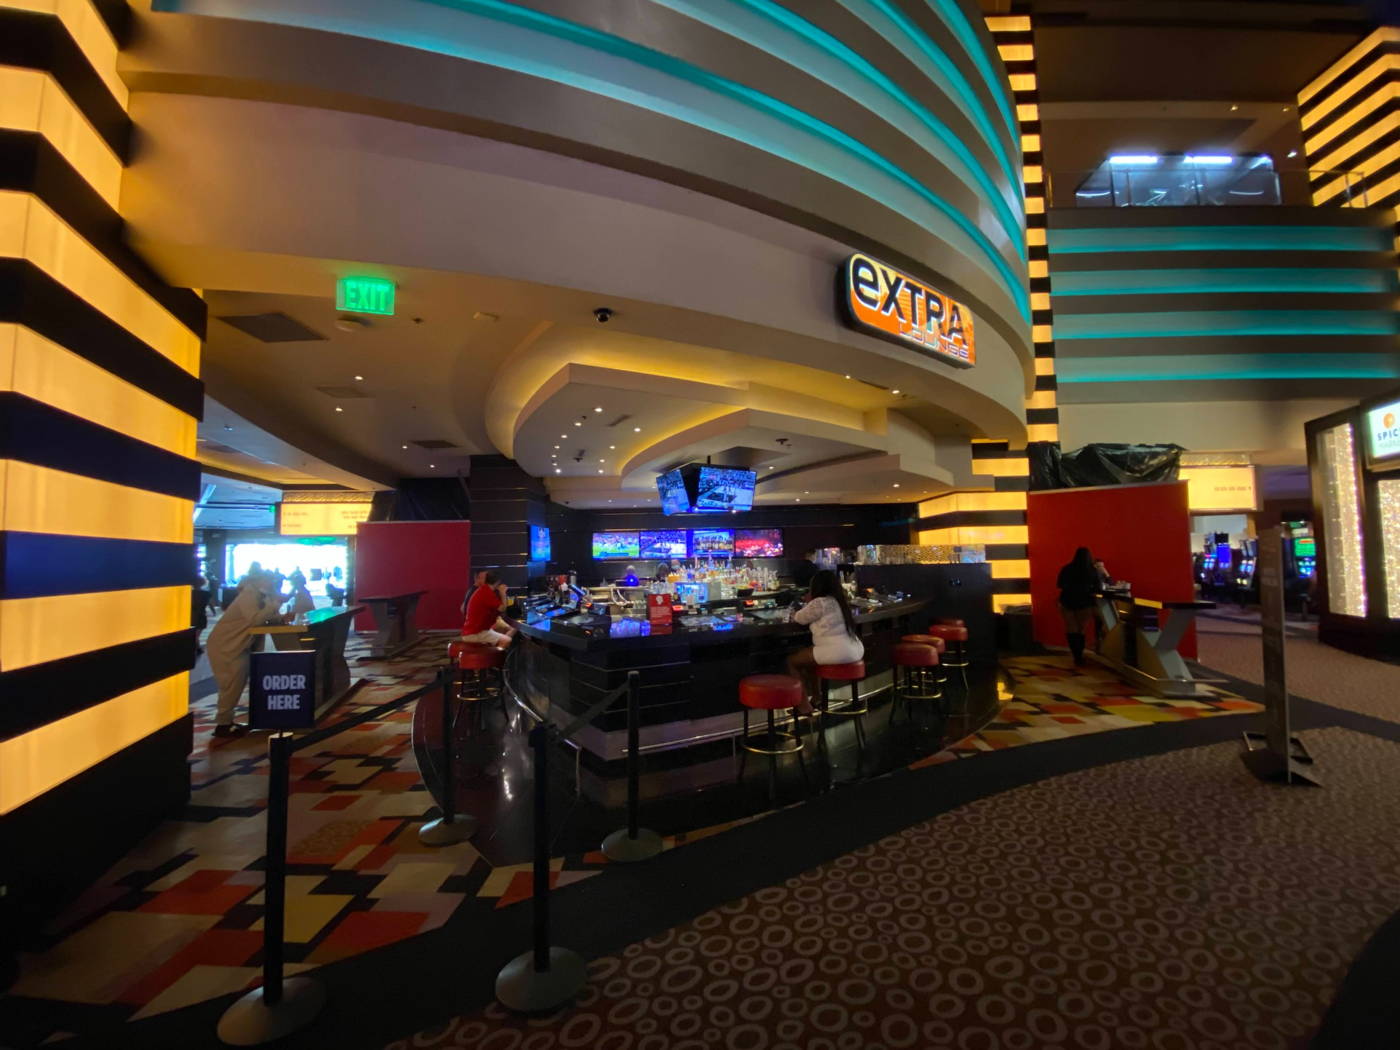 EXTRA Lounge at Planet Hollywood Las Vegas